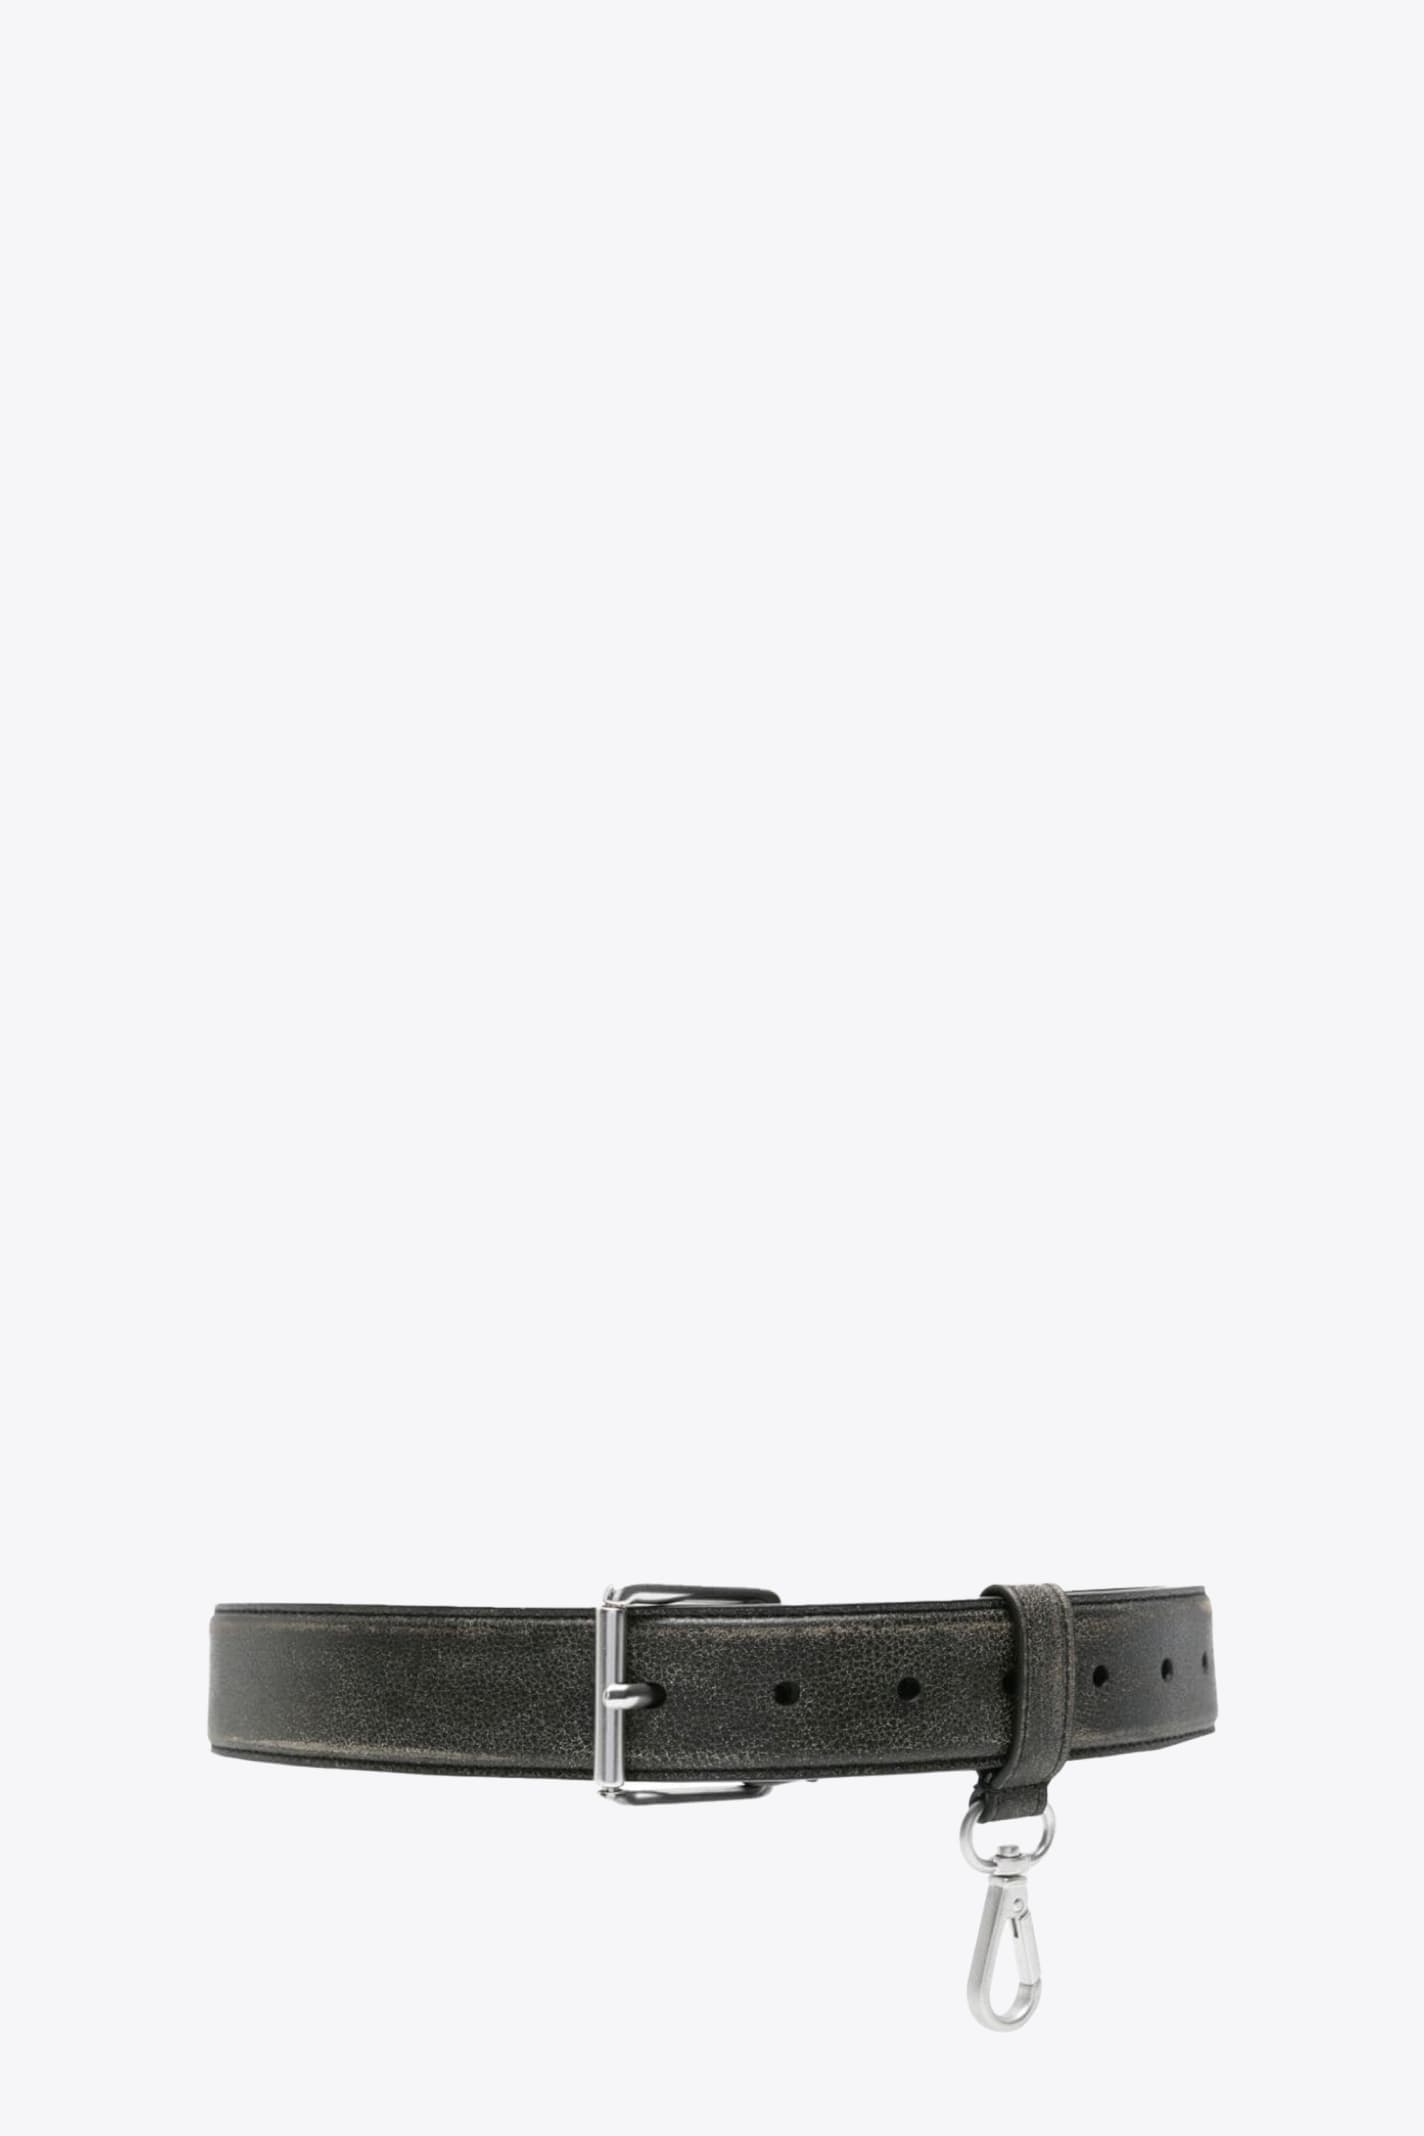 Cintura Distressed Black Leather Belt With Snap-hook